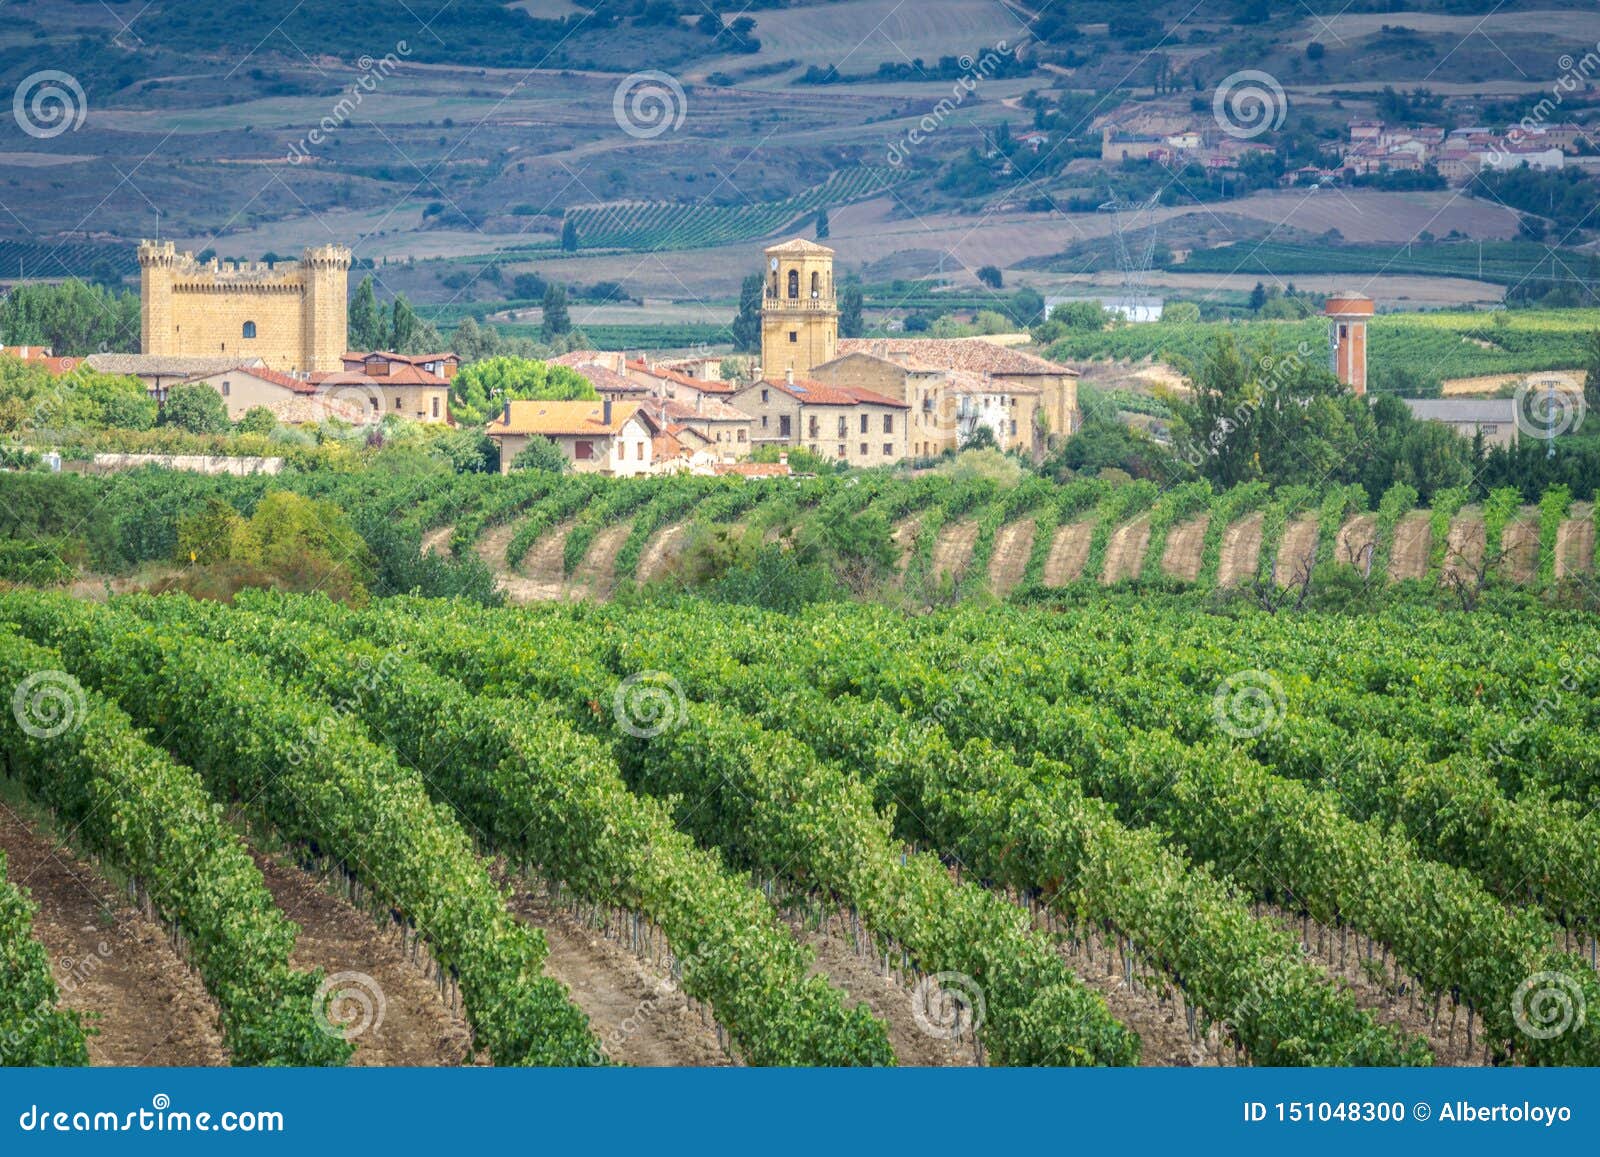 vineyards with sajazarra village as background, la rioja, spain